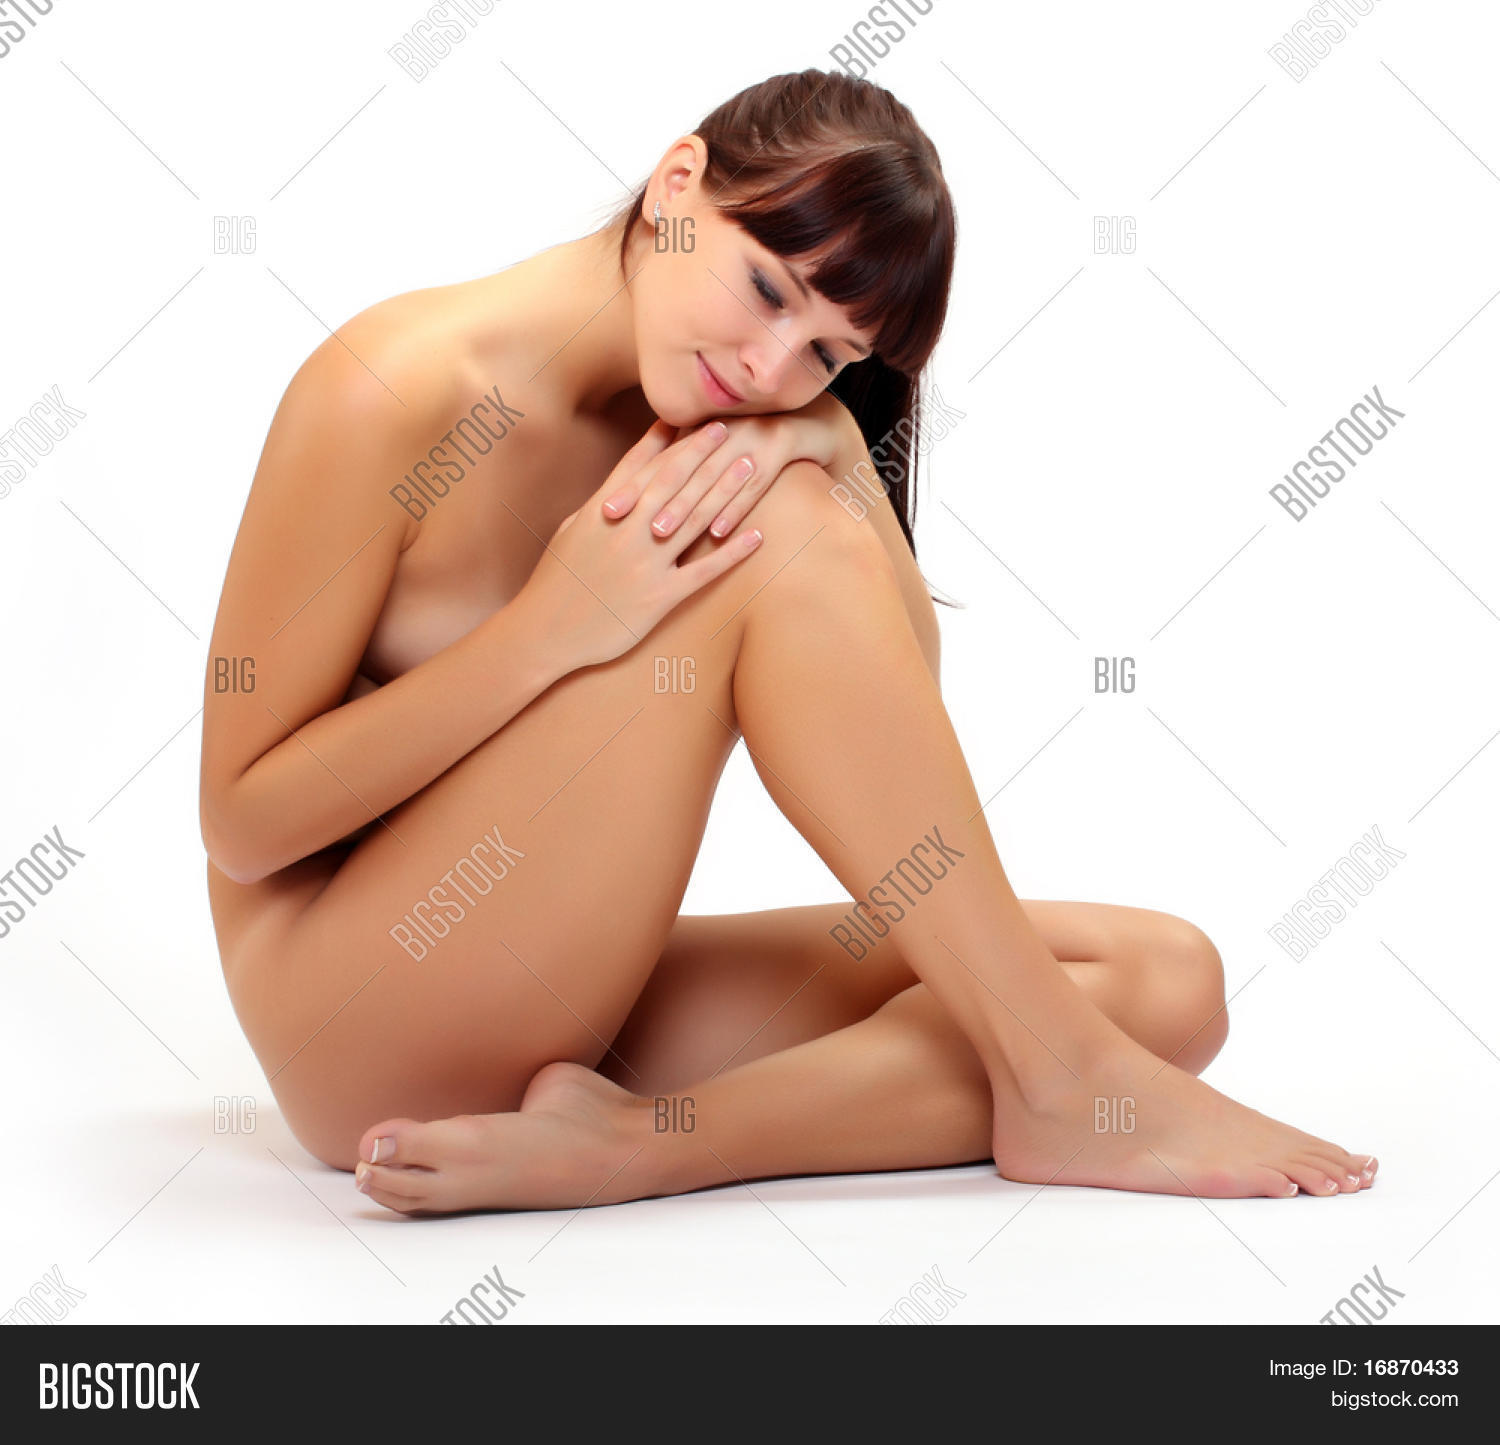 doron zafrir share free naked white women photos